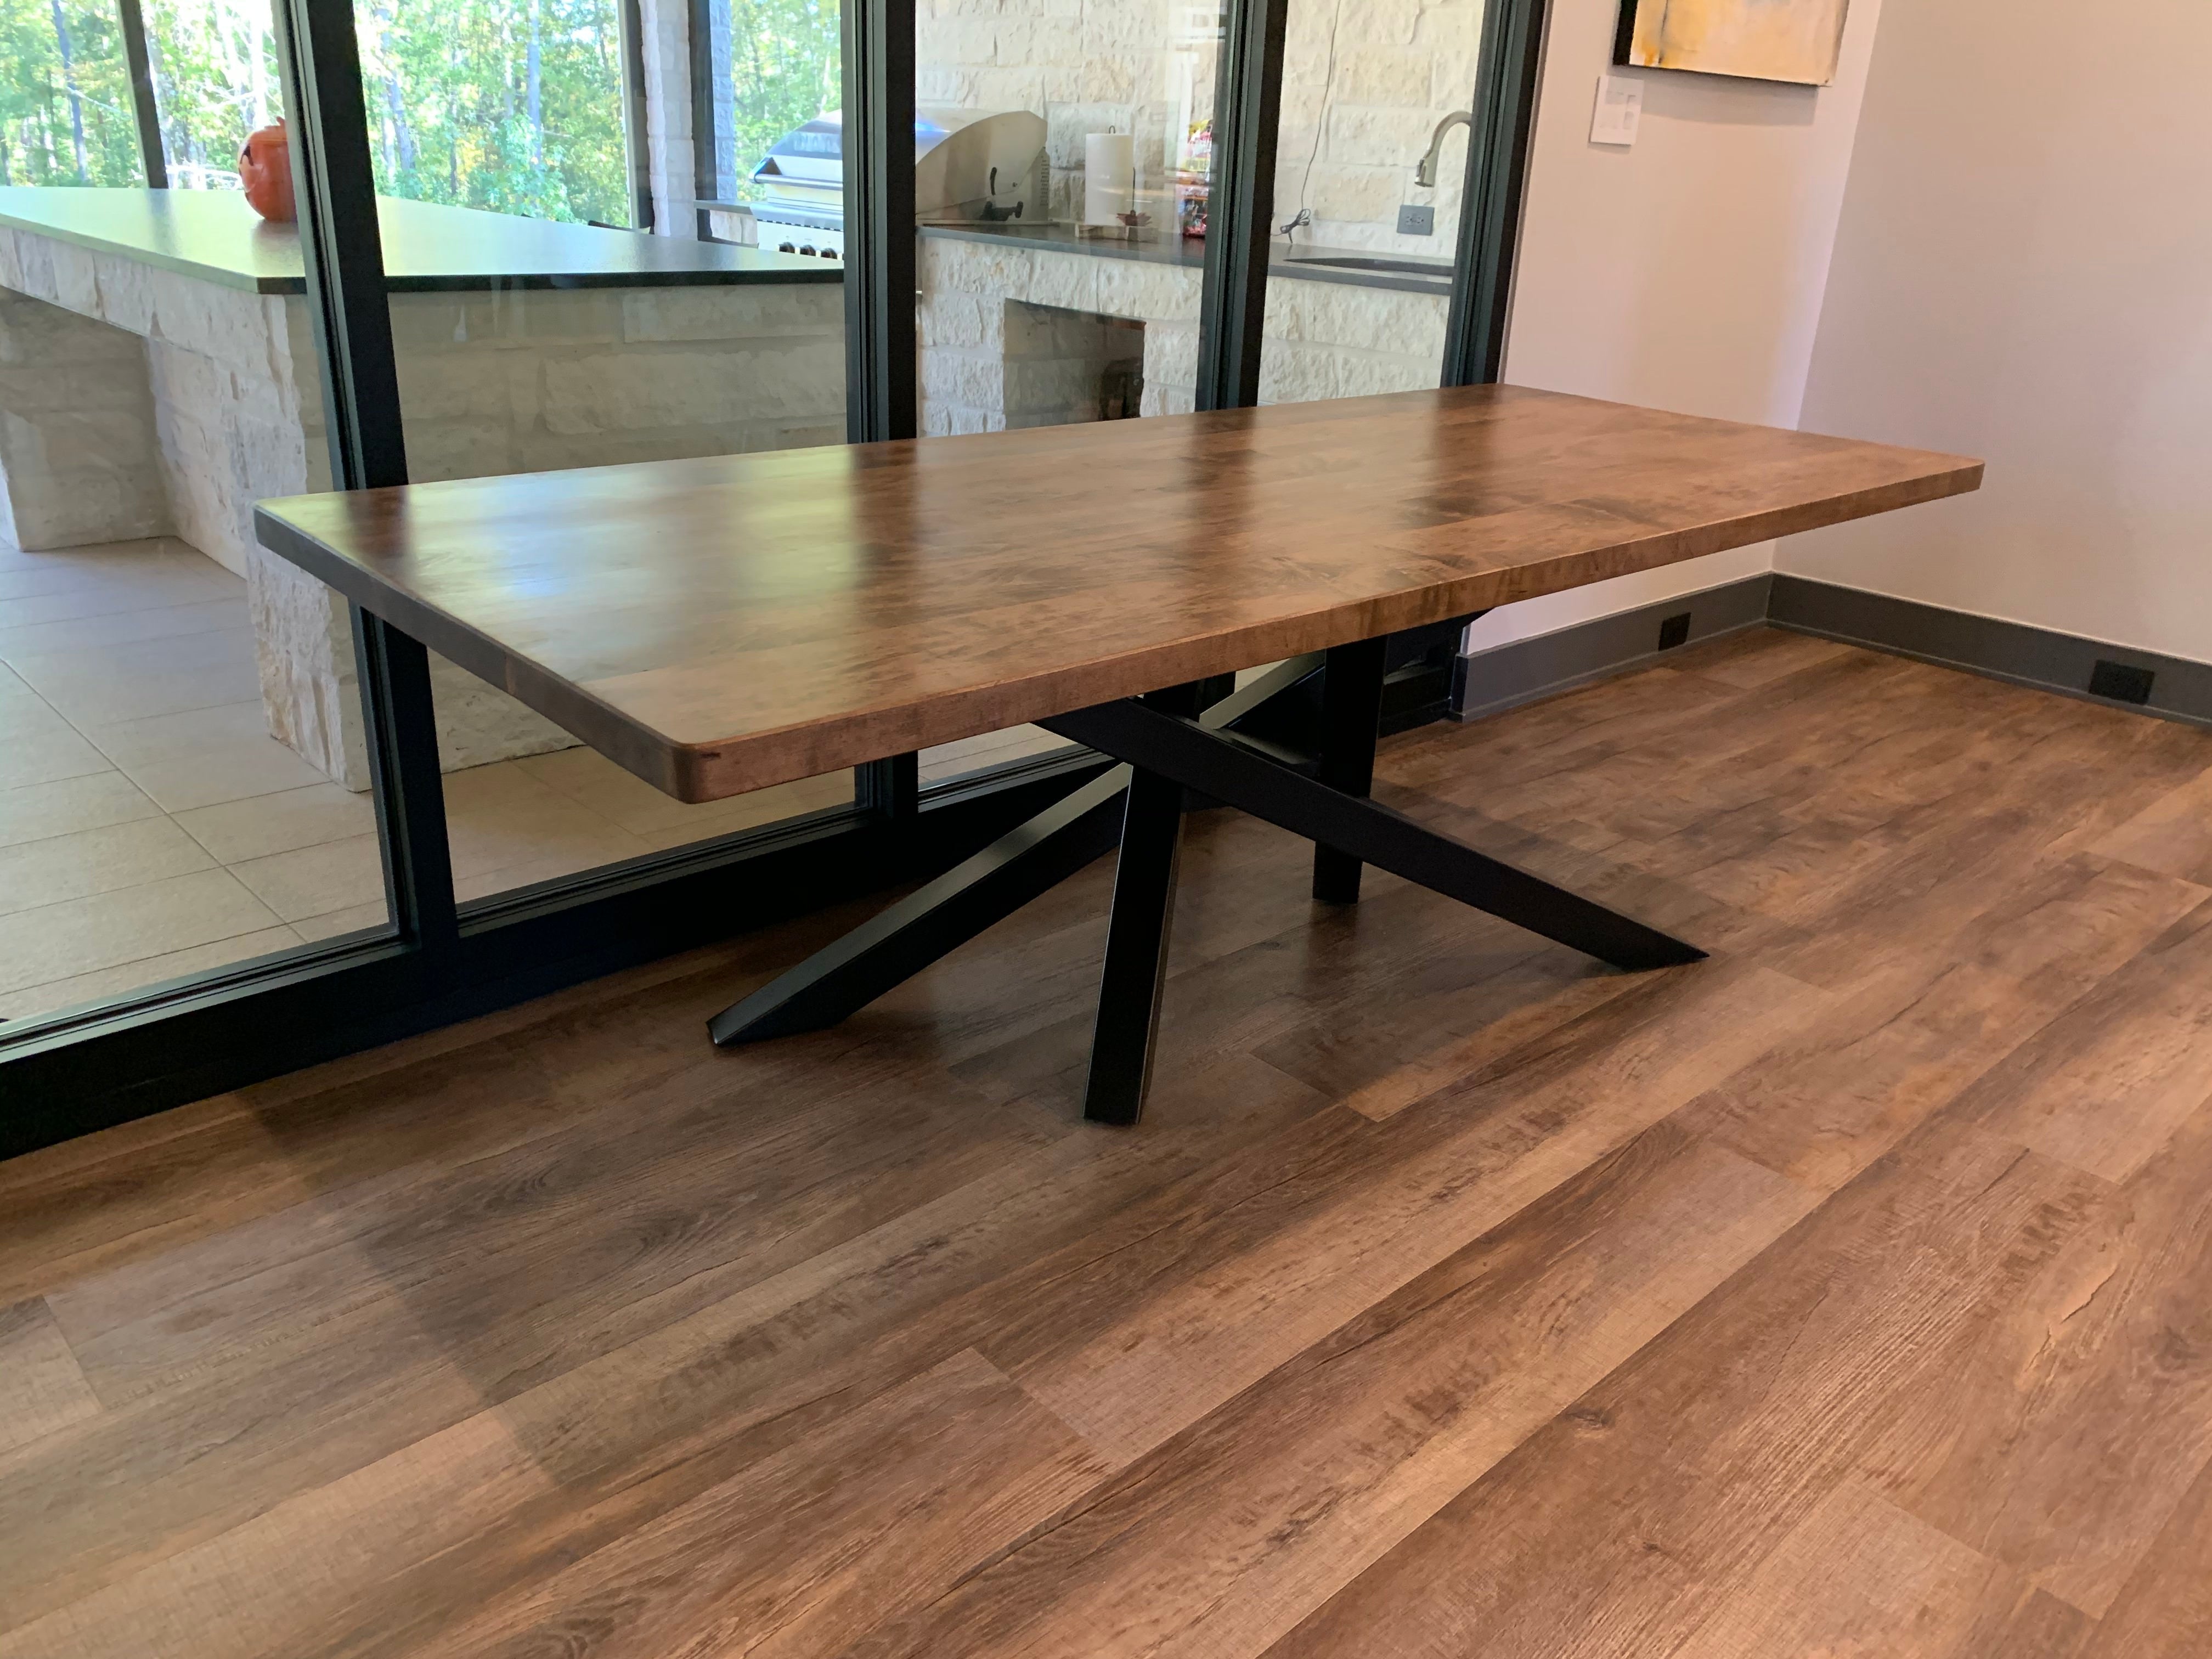 The Modern Flagstaff Table